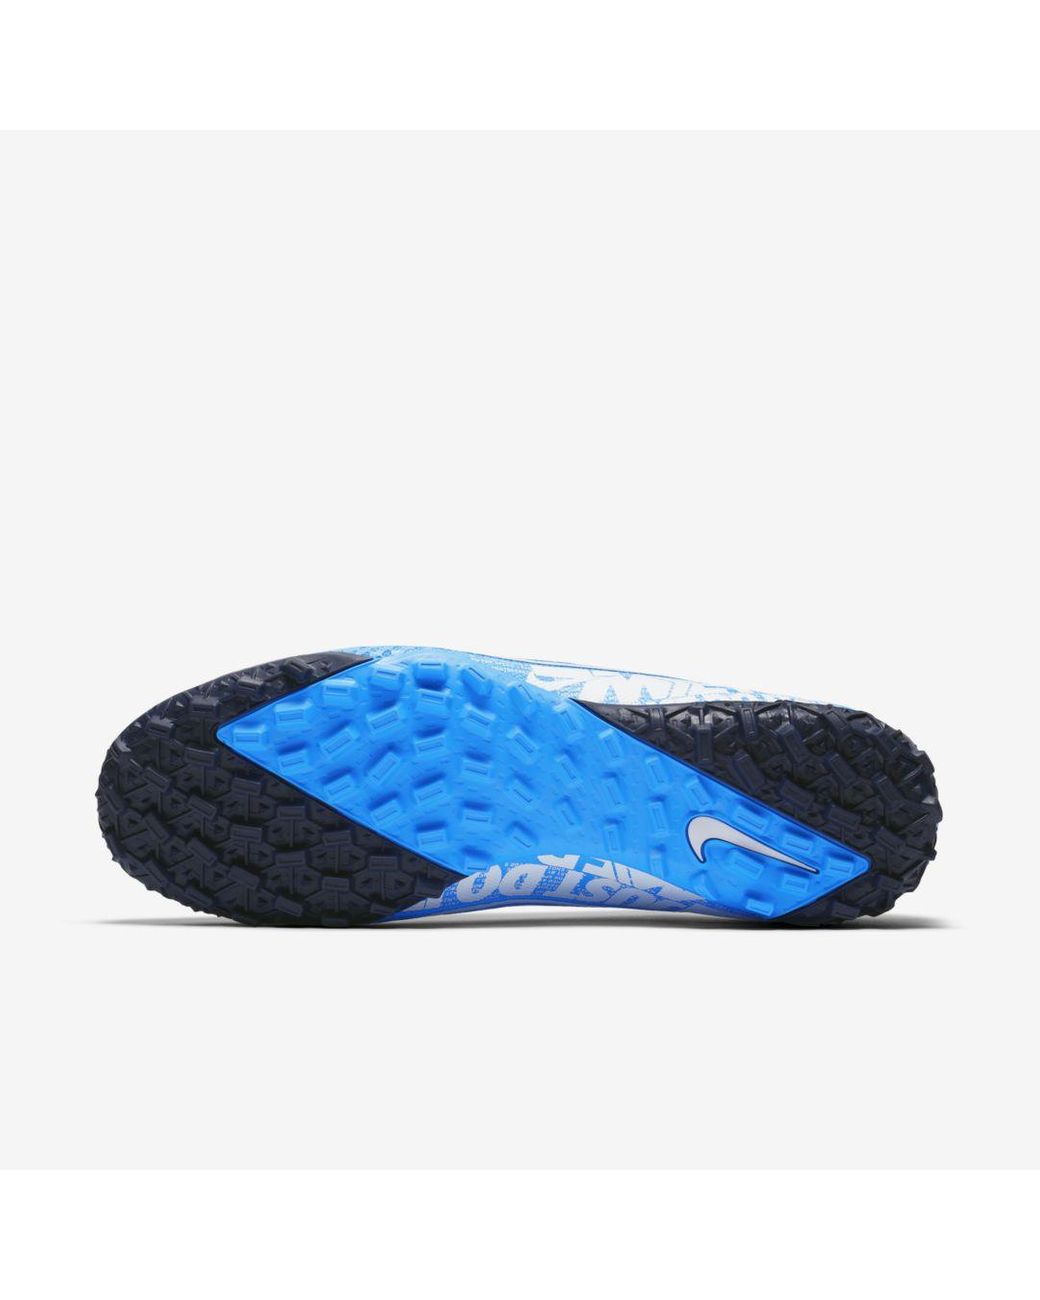 Nike Mercurial Vapor Flyknit Ultra FG BlackMetallic Blue